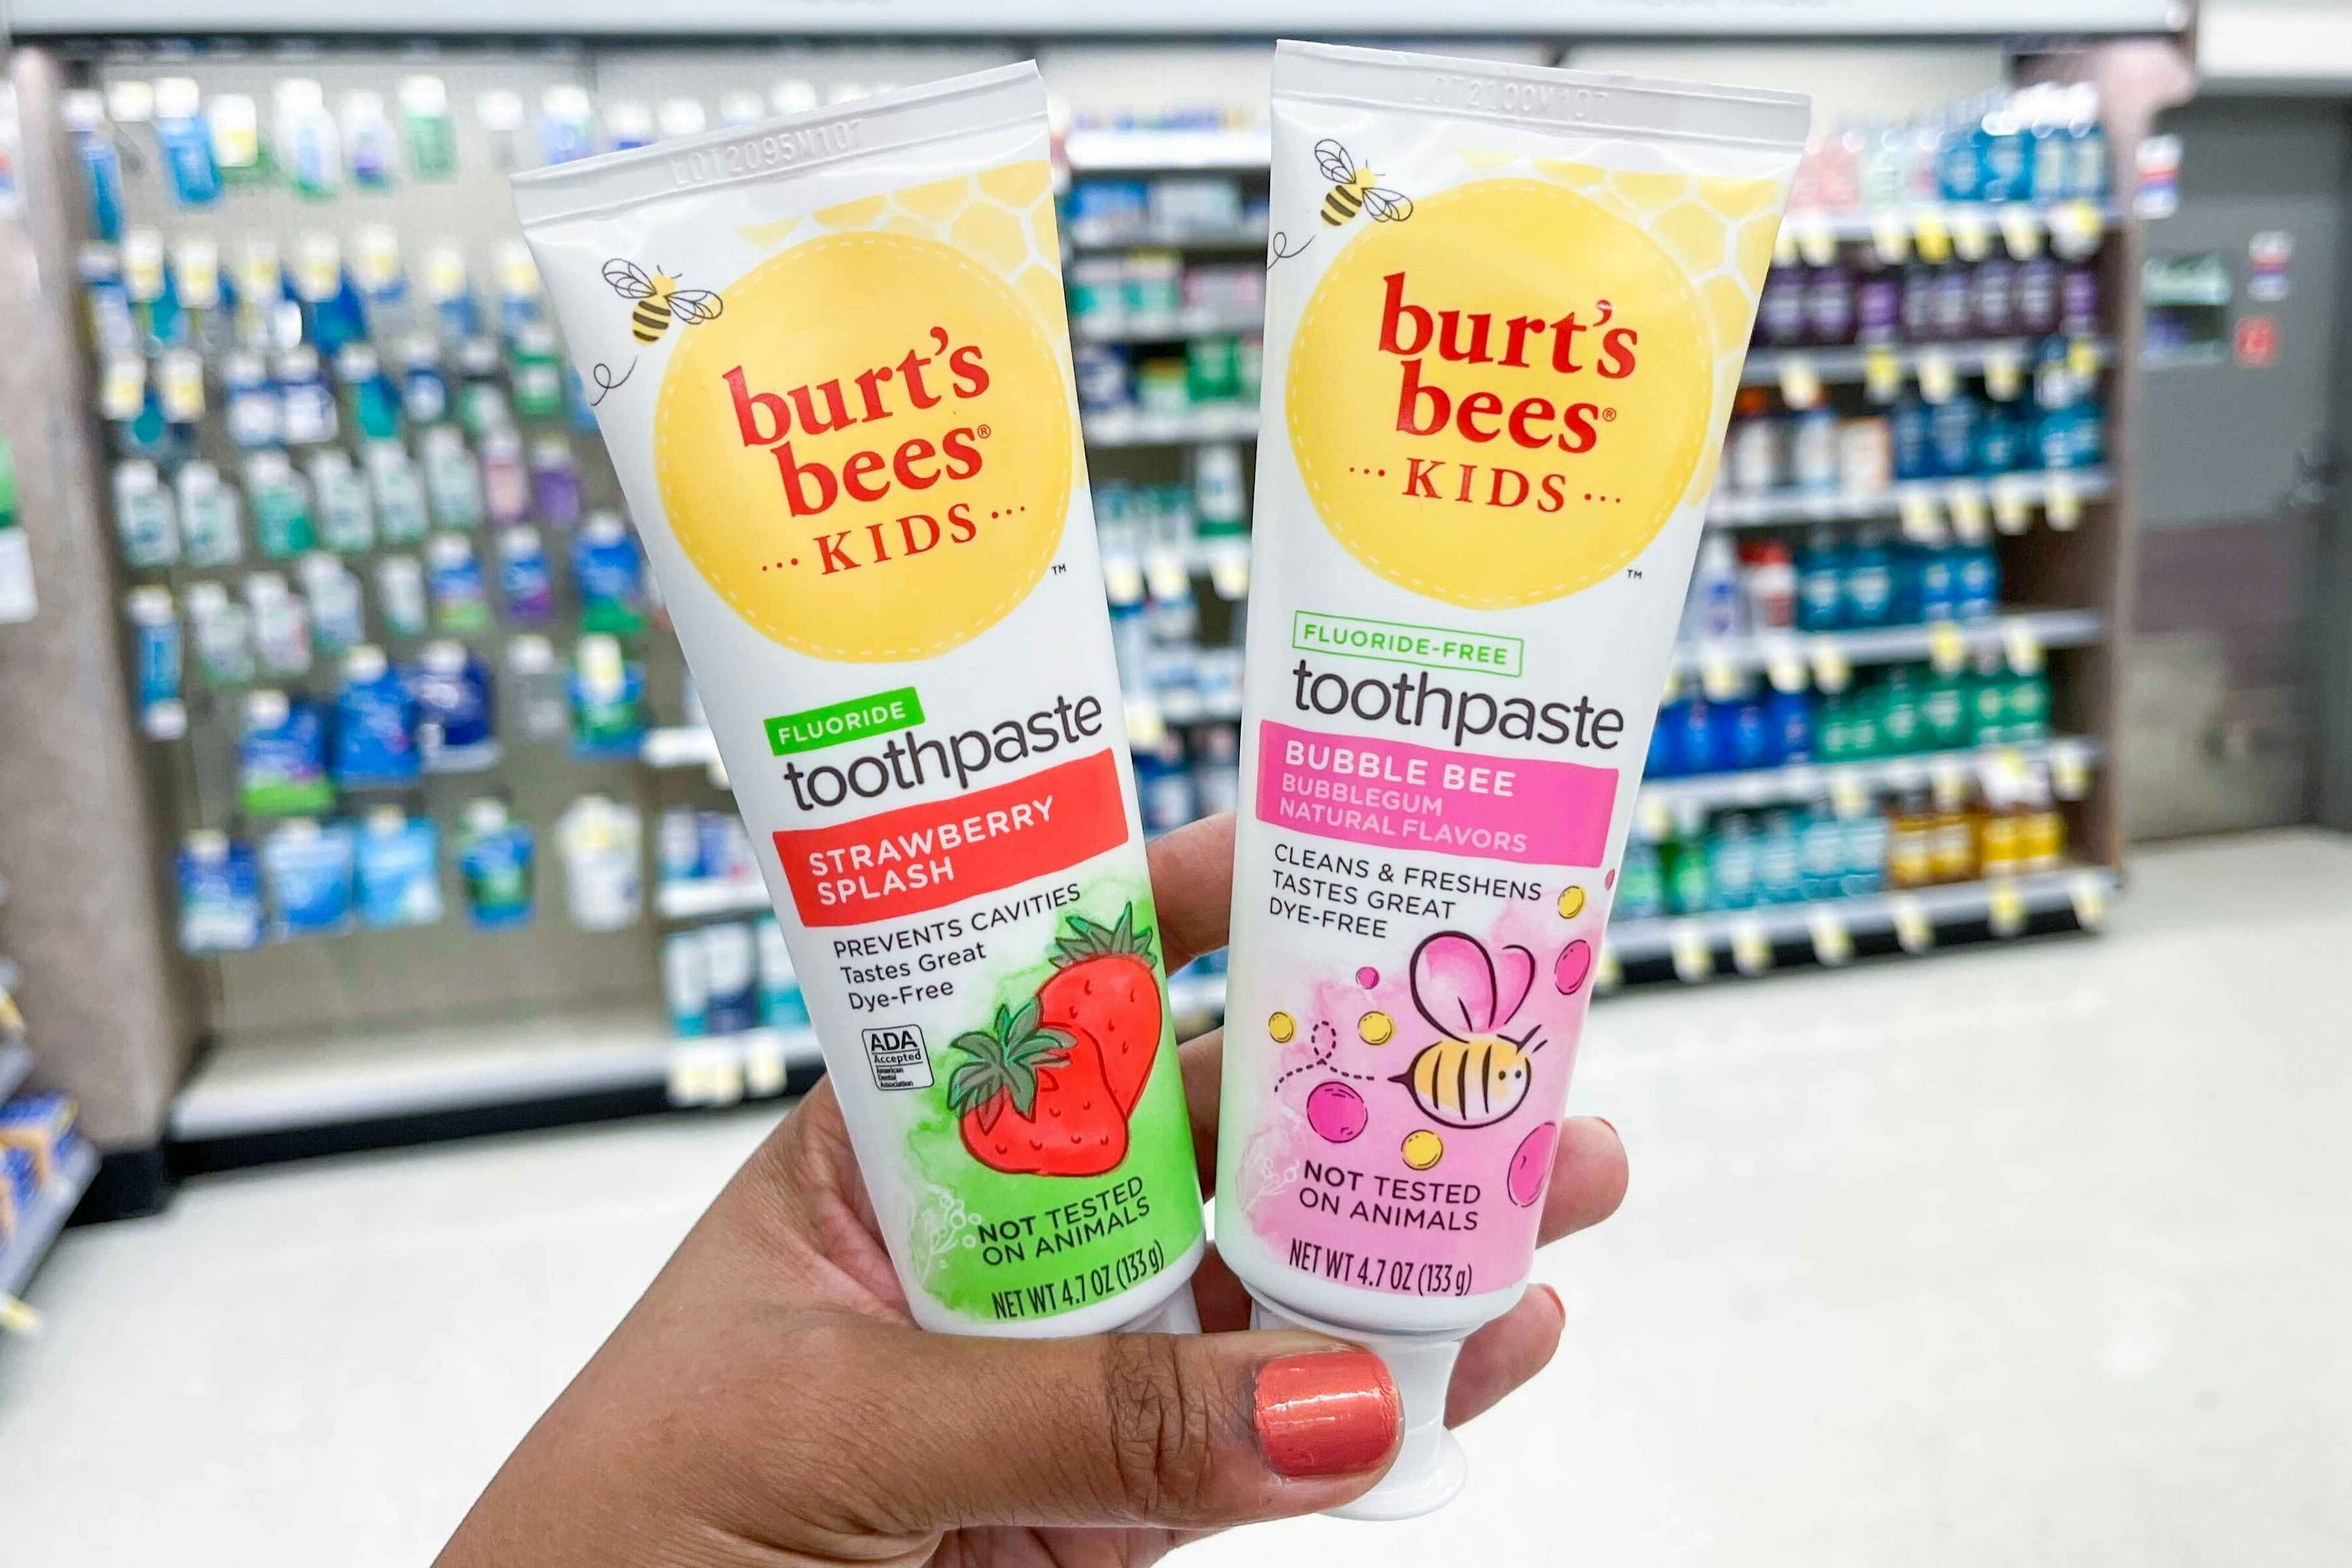 Burt's Bees Kids Toothpaste, Just $0.50 at Walgreens